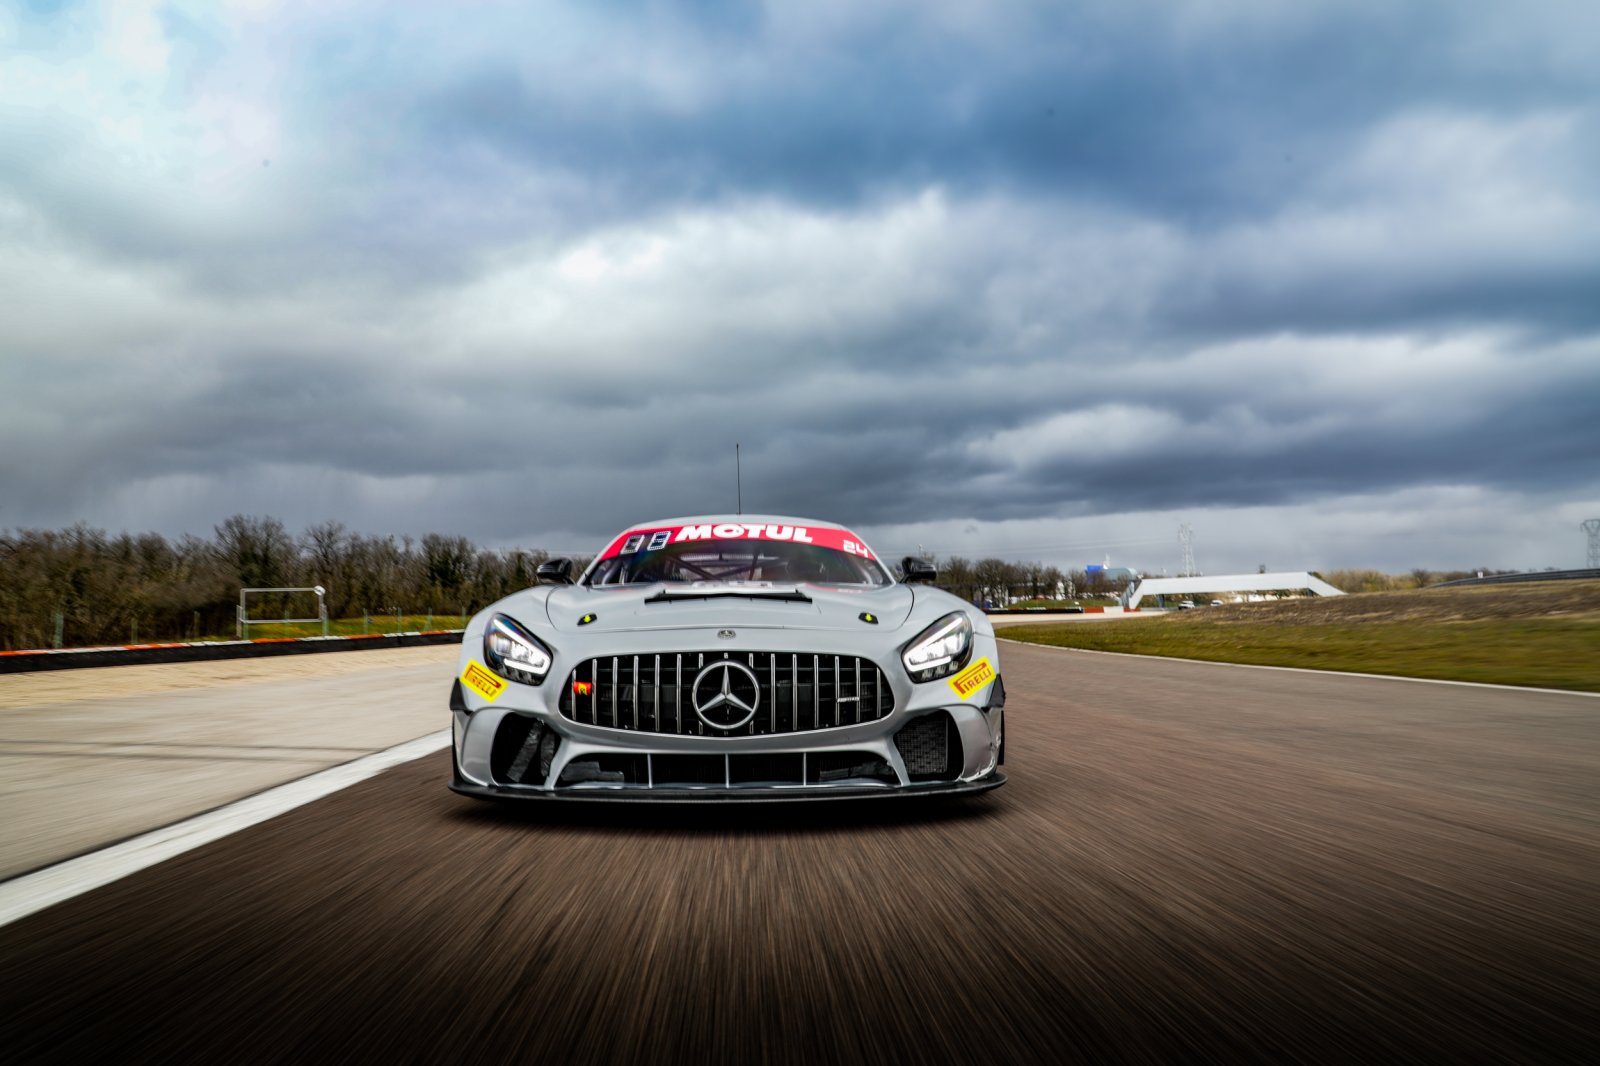 #24 Armada Racing - Mercedes AMG GT4, FFSA GT, Prologue, Rolling Shoot
